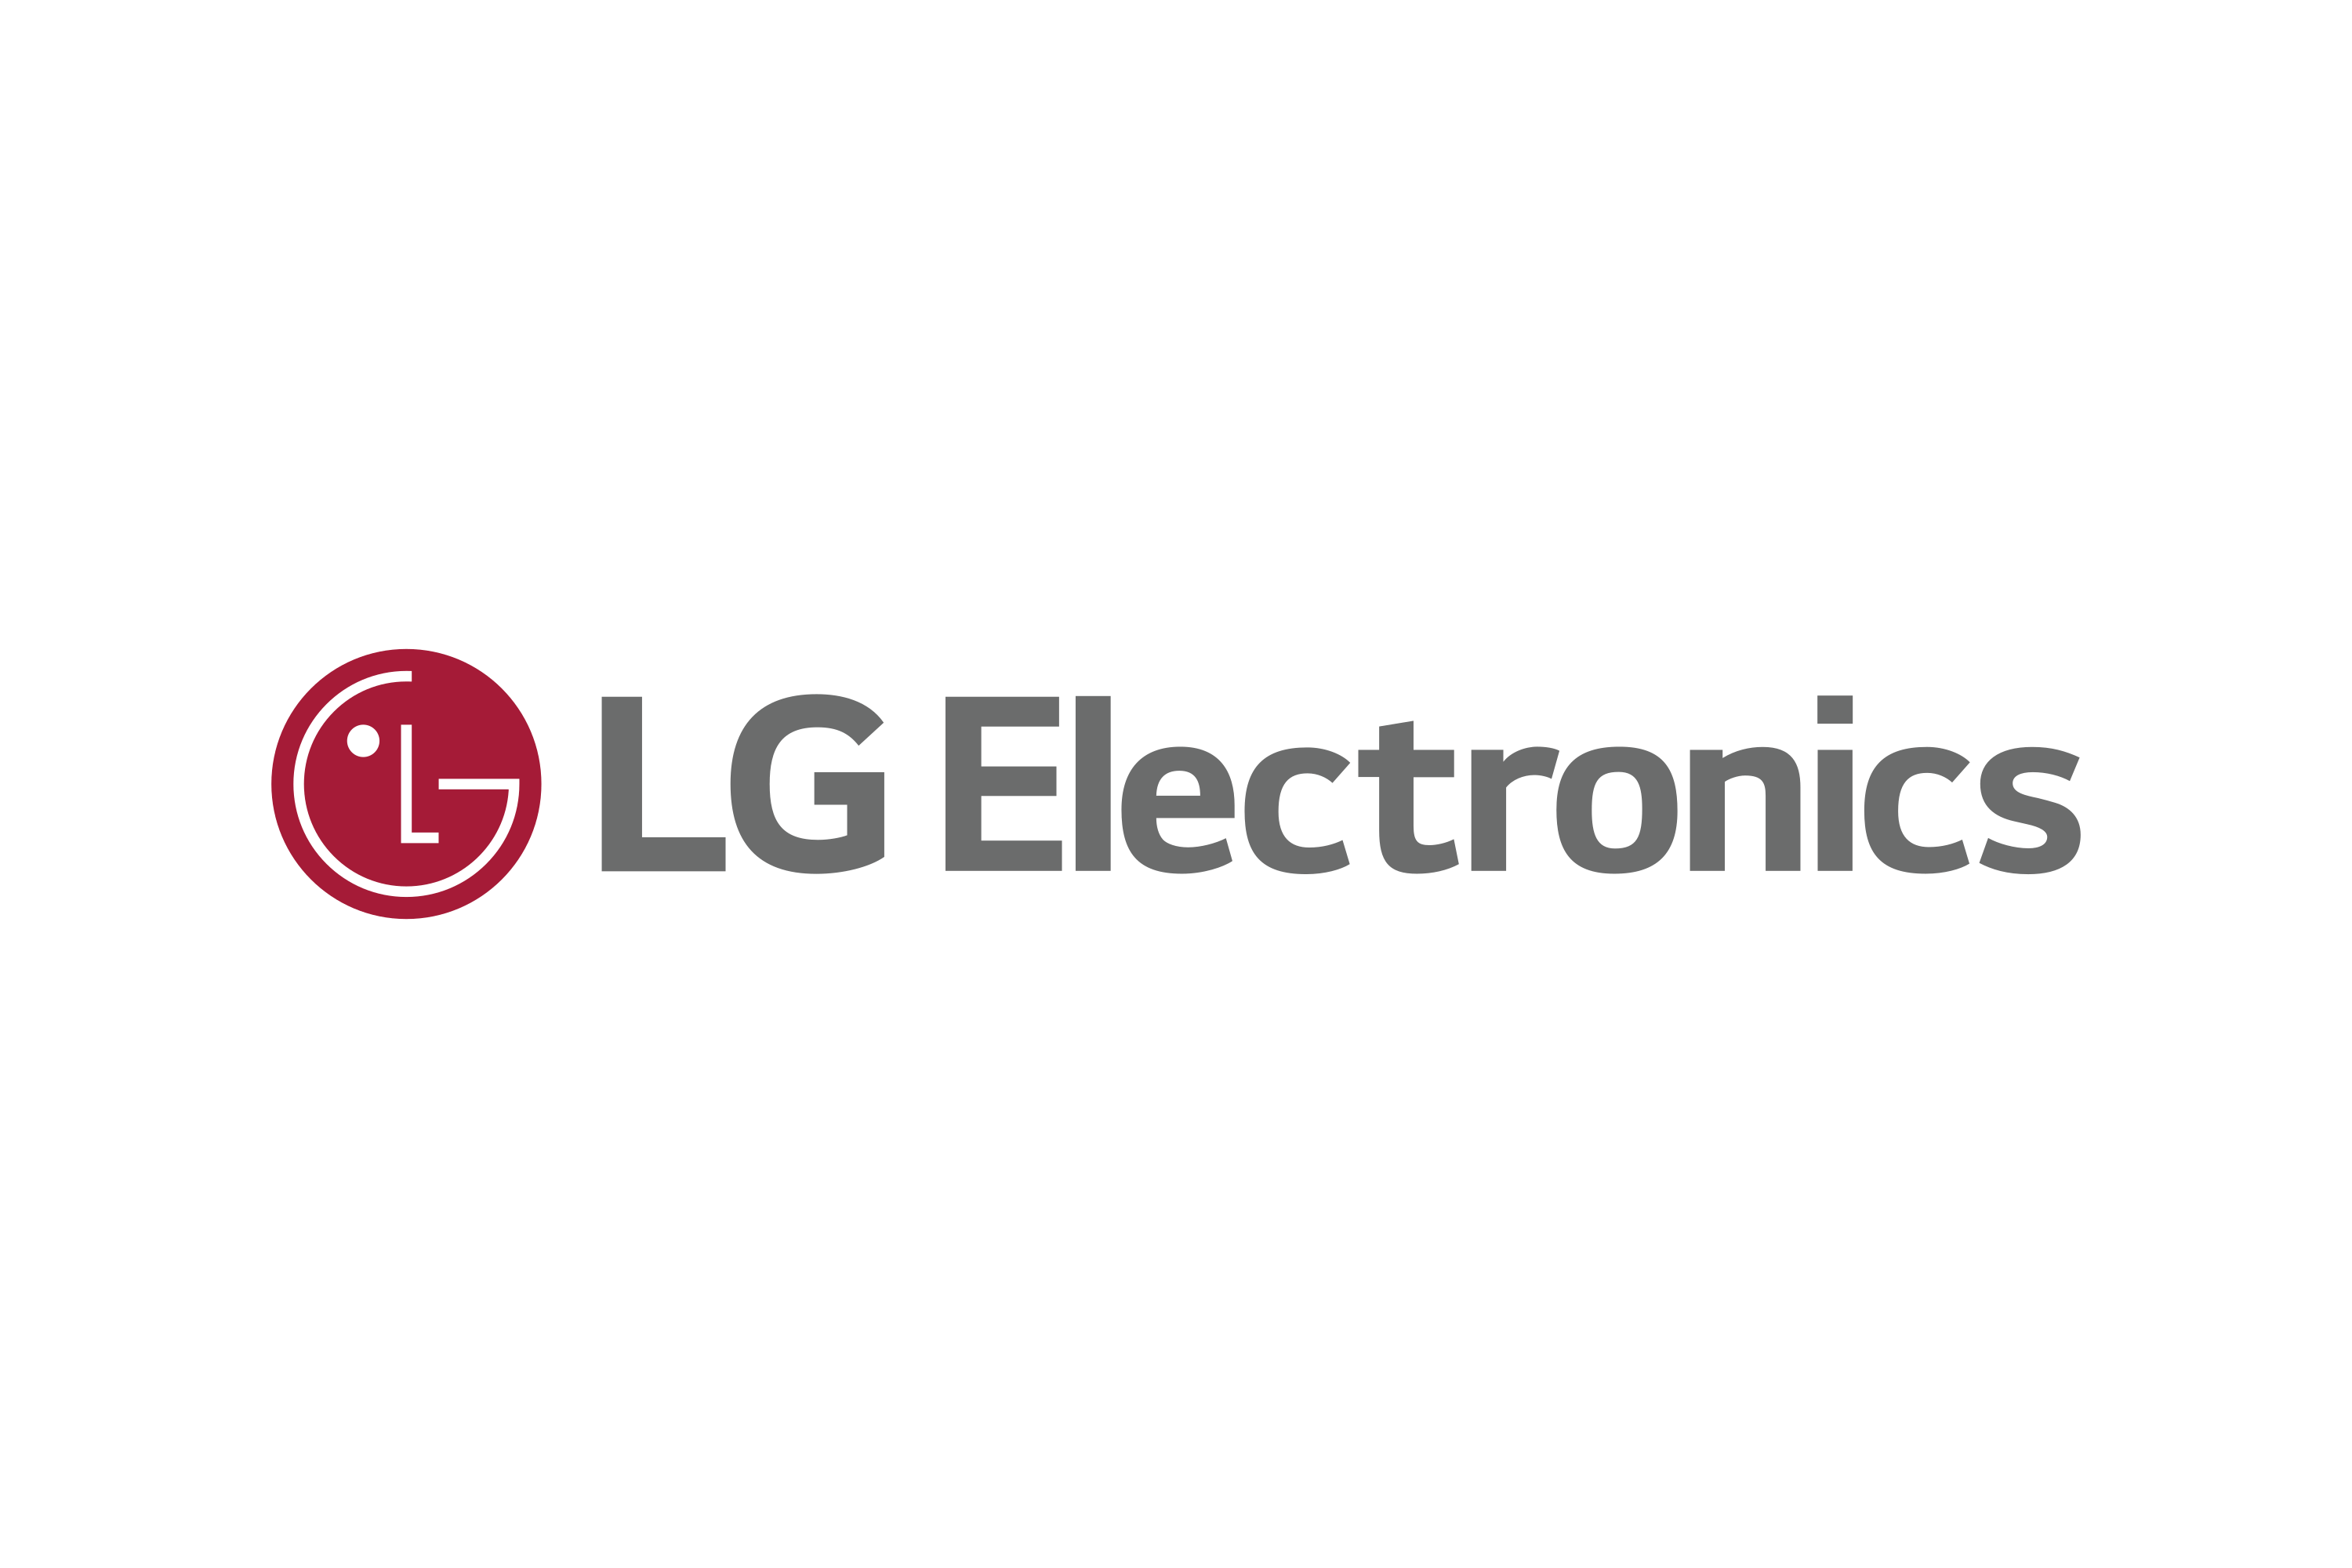 LG Logo Transparent Images | PNG Play